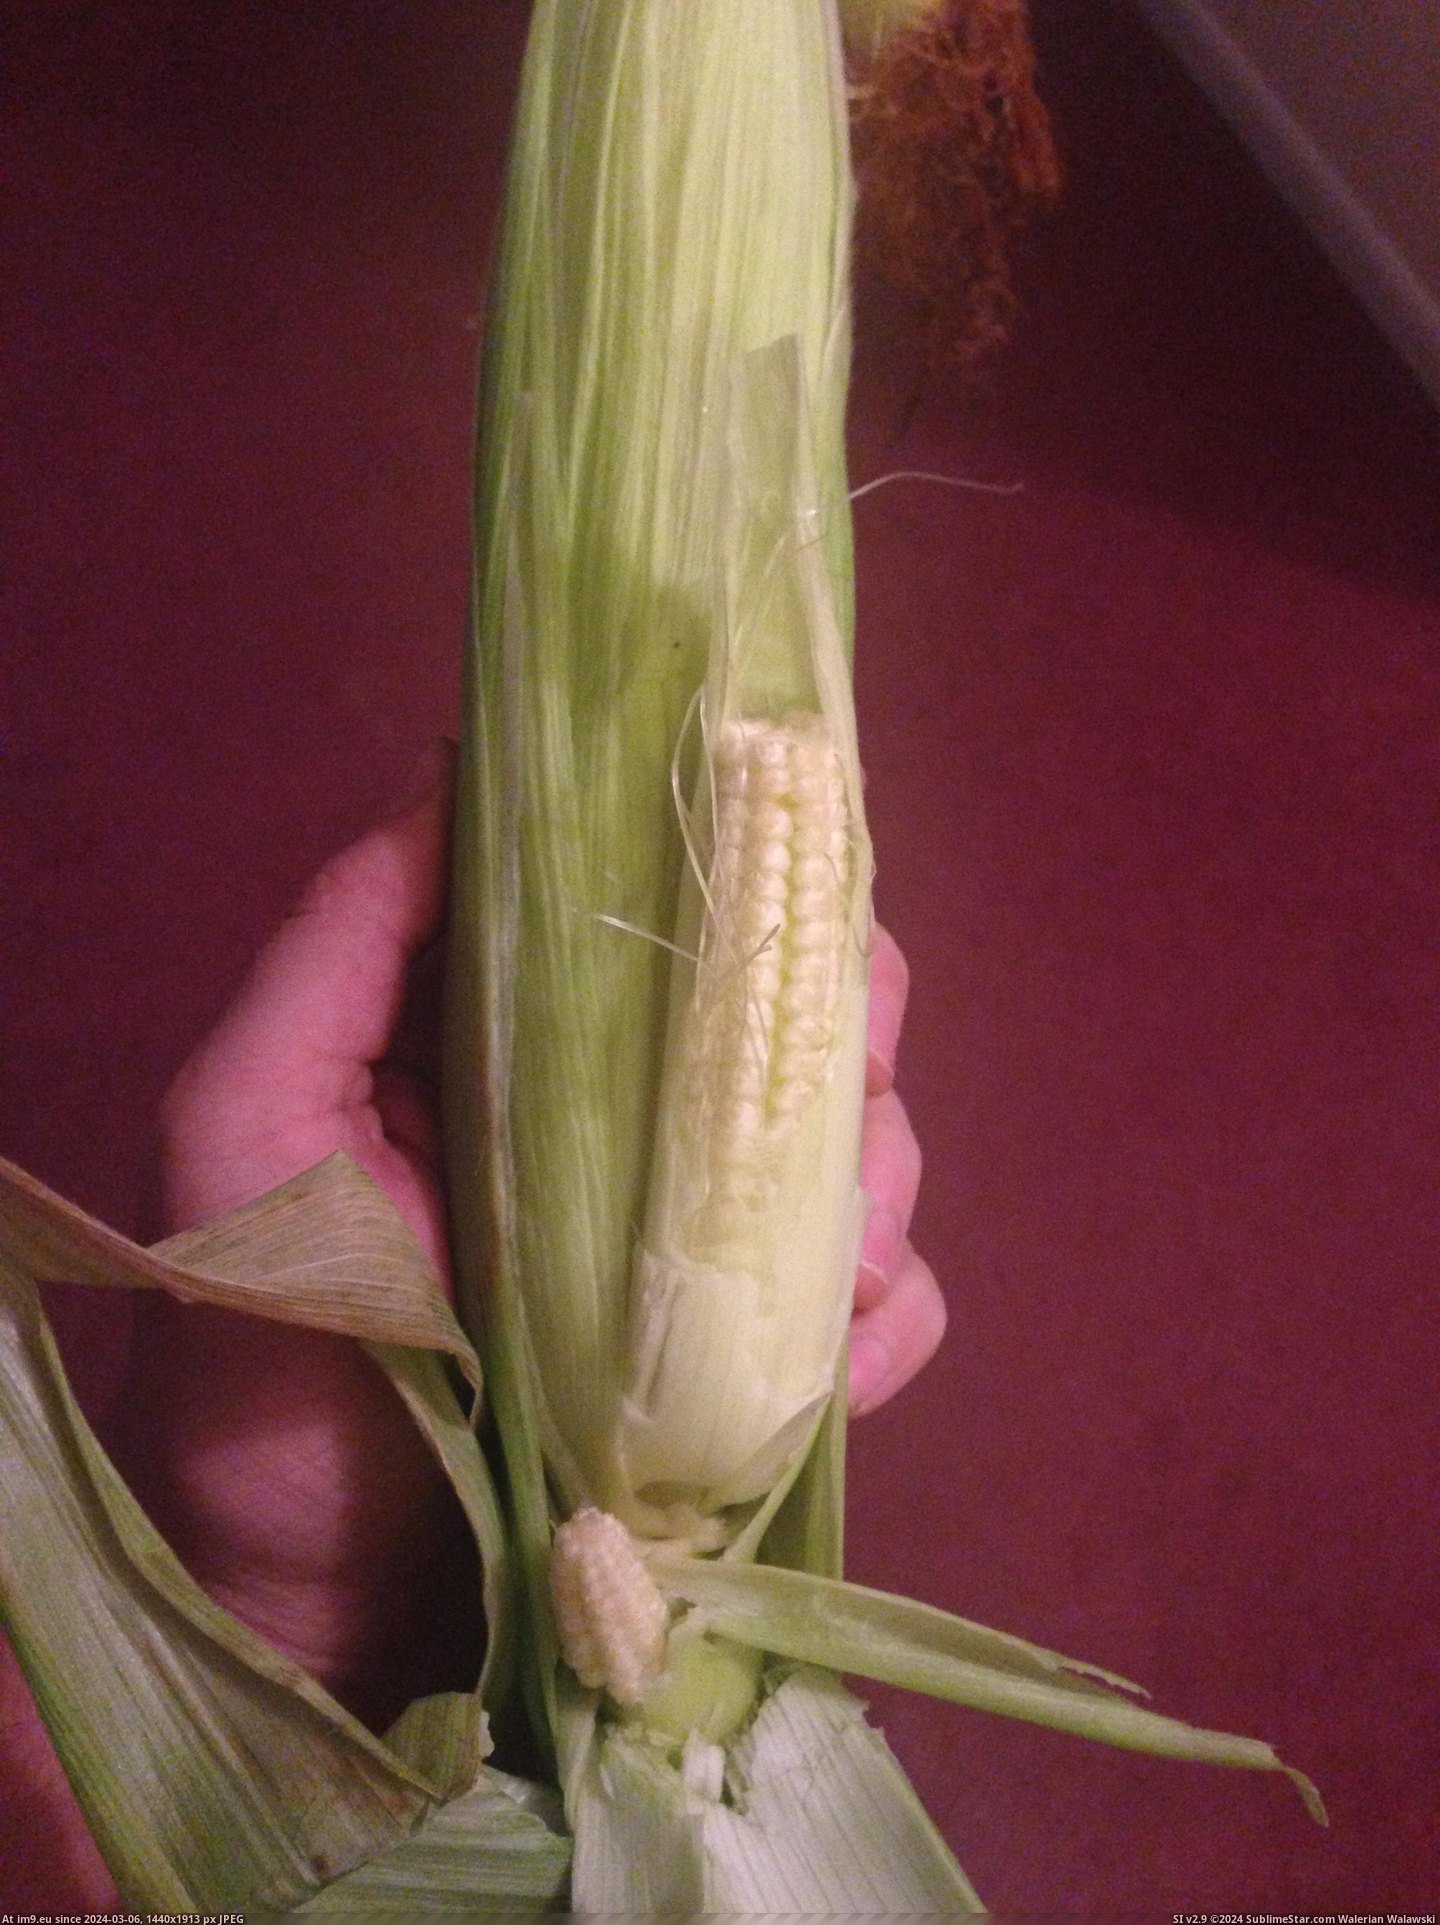 #Had #Smaller #Corn #Growing [Mildlyinteresting] My corn had a smaller and smaller corn growing inside it Pic. (Obraz z album My r/MILDLYINTERESTING favs))